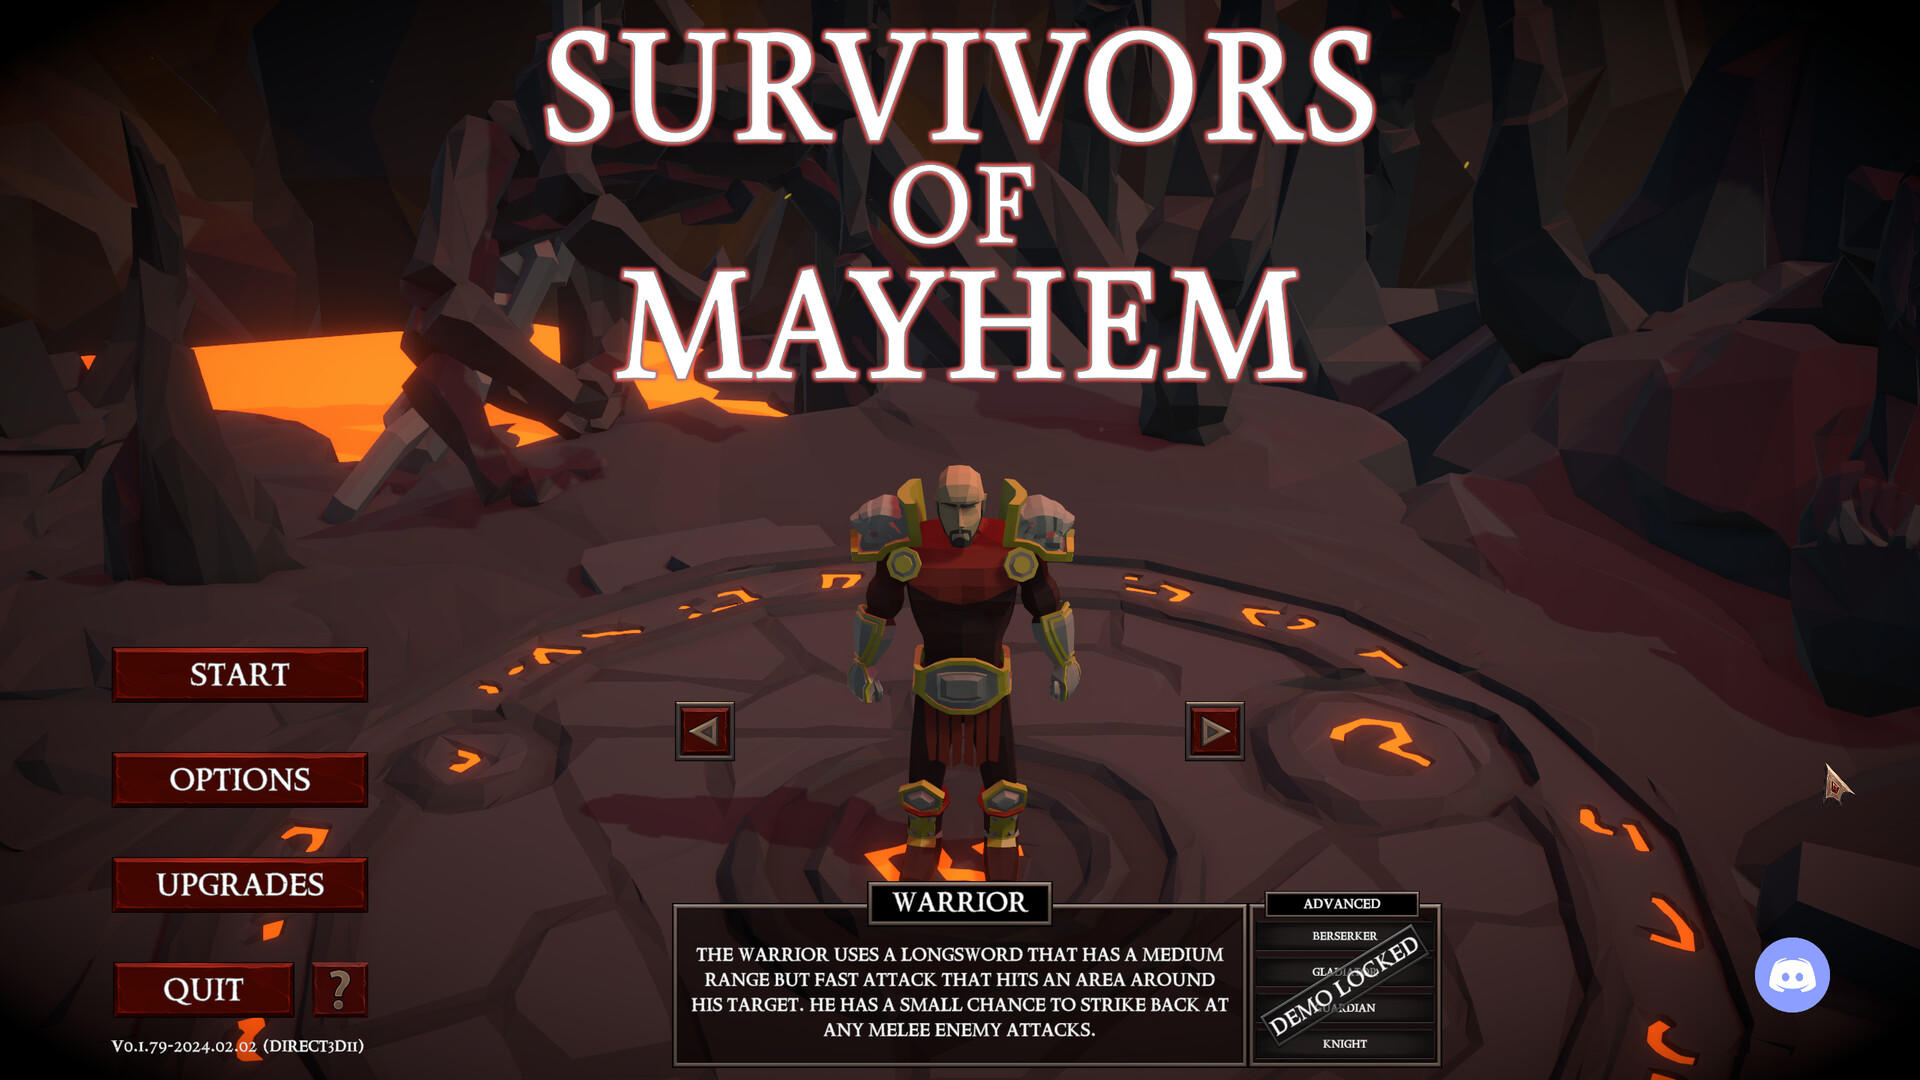 Screenshot 1 of អ្នករស់រានមានជីវិតពី Mayhem 